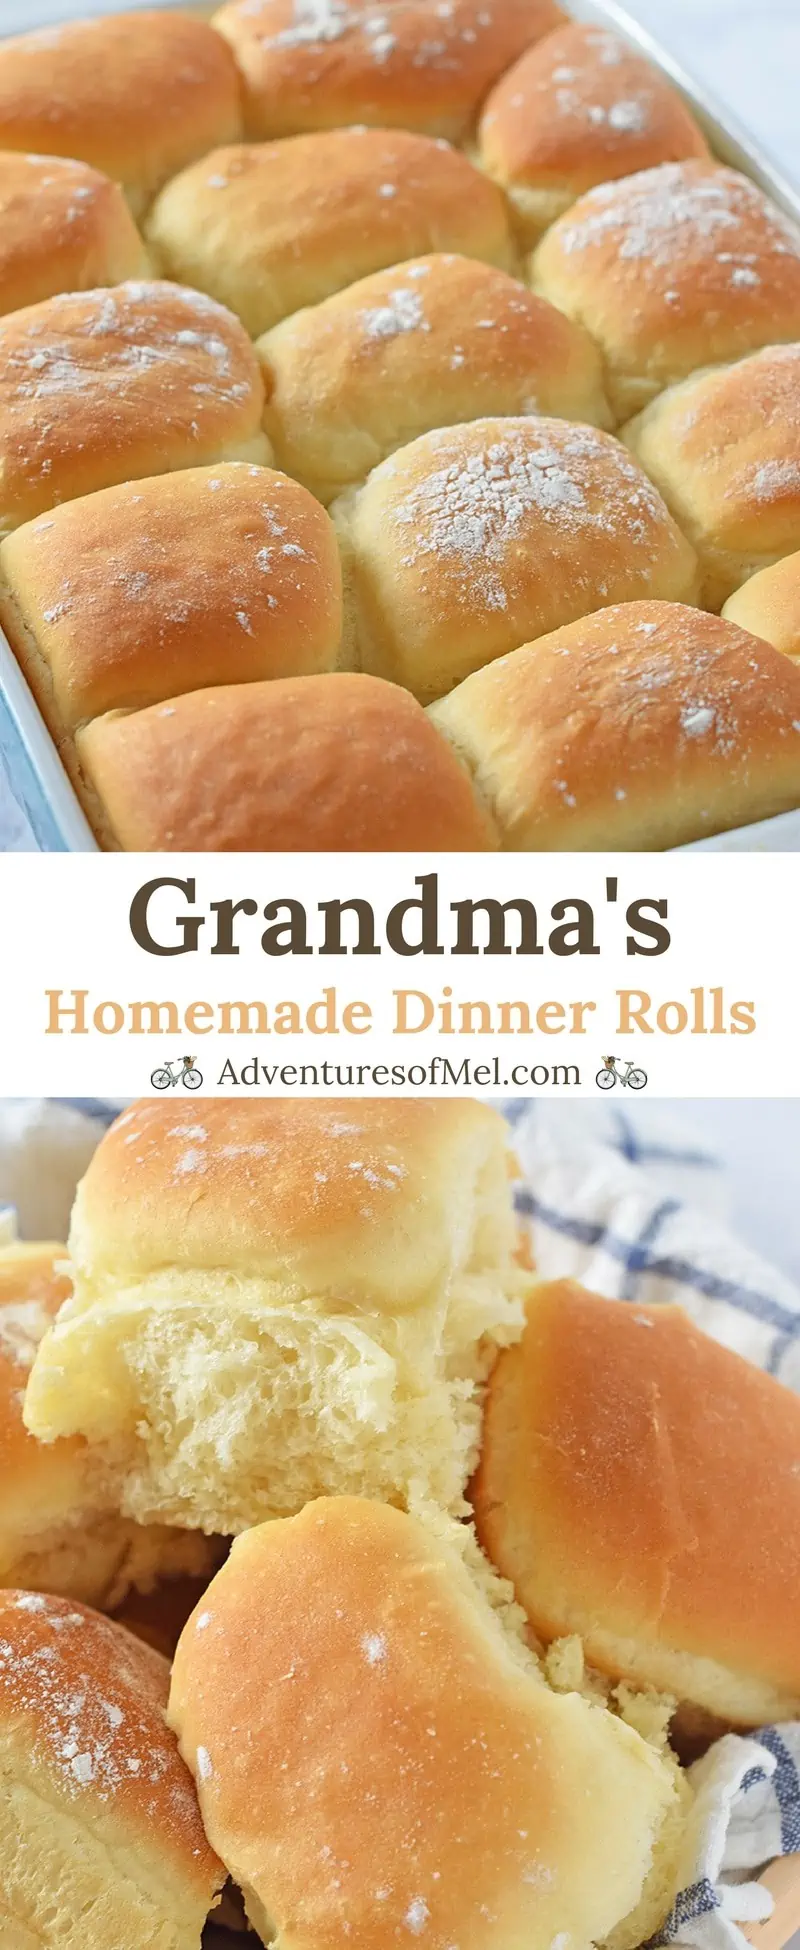 Grandma's homemade dinner rolls recipe